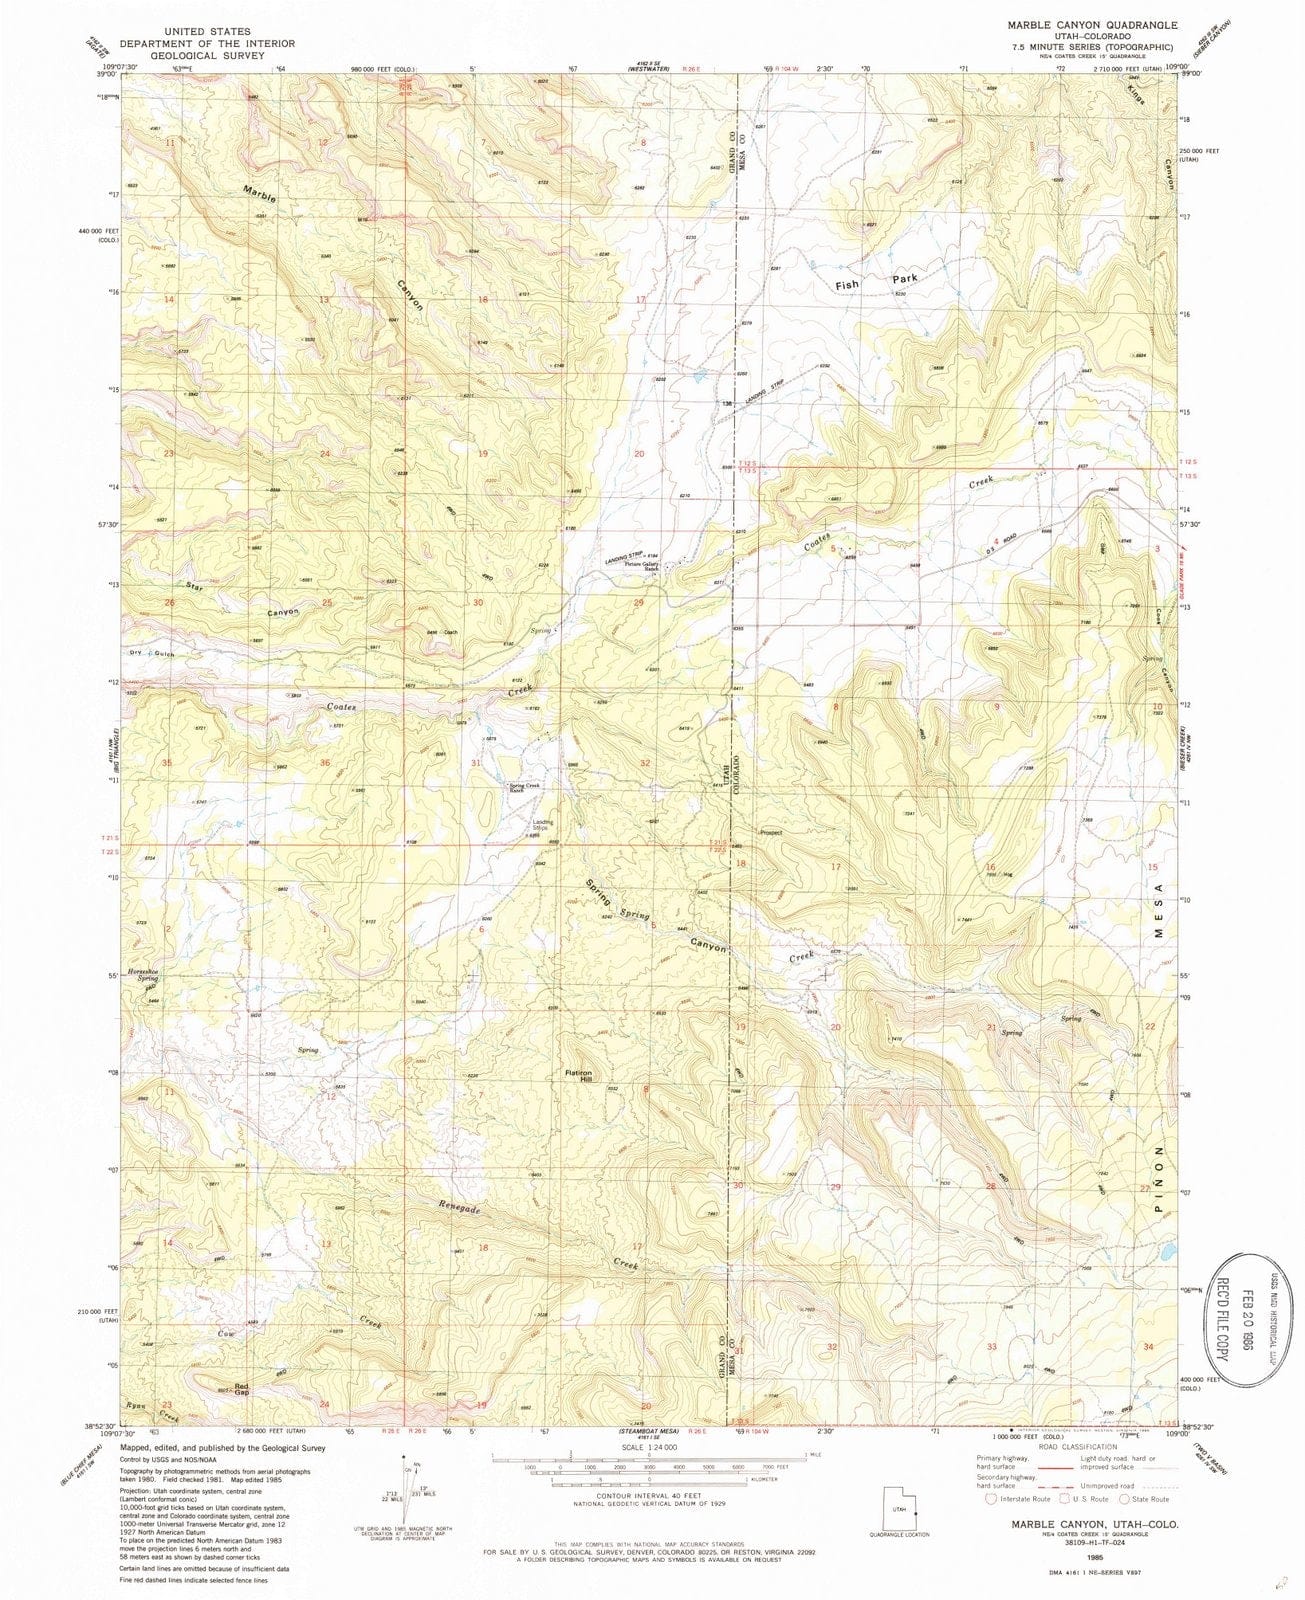 1985 Marble Canyon, UT - Utah - USGS Topographic Map